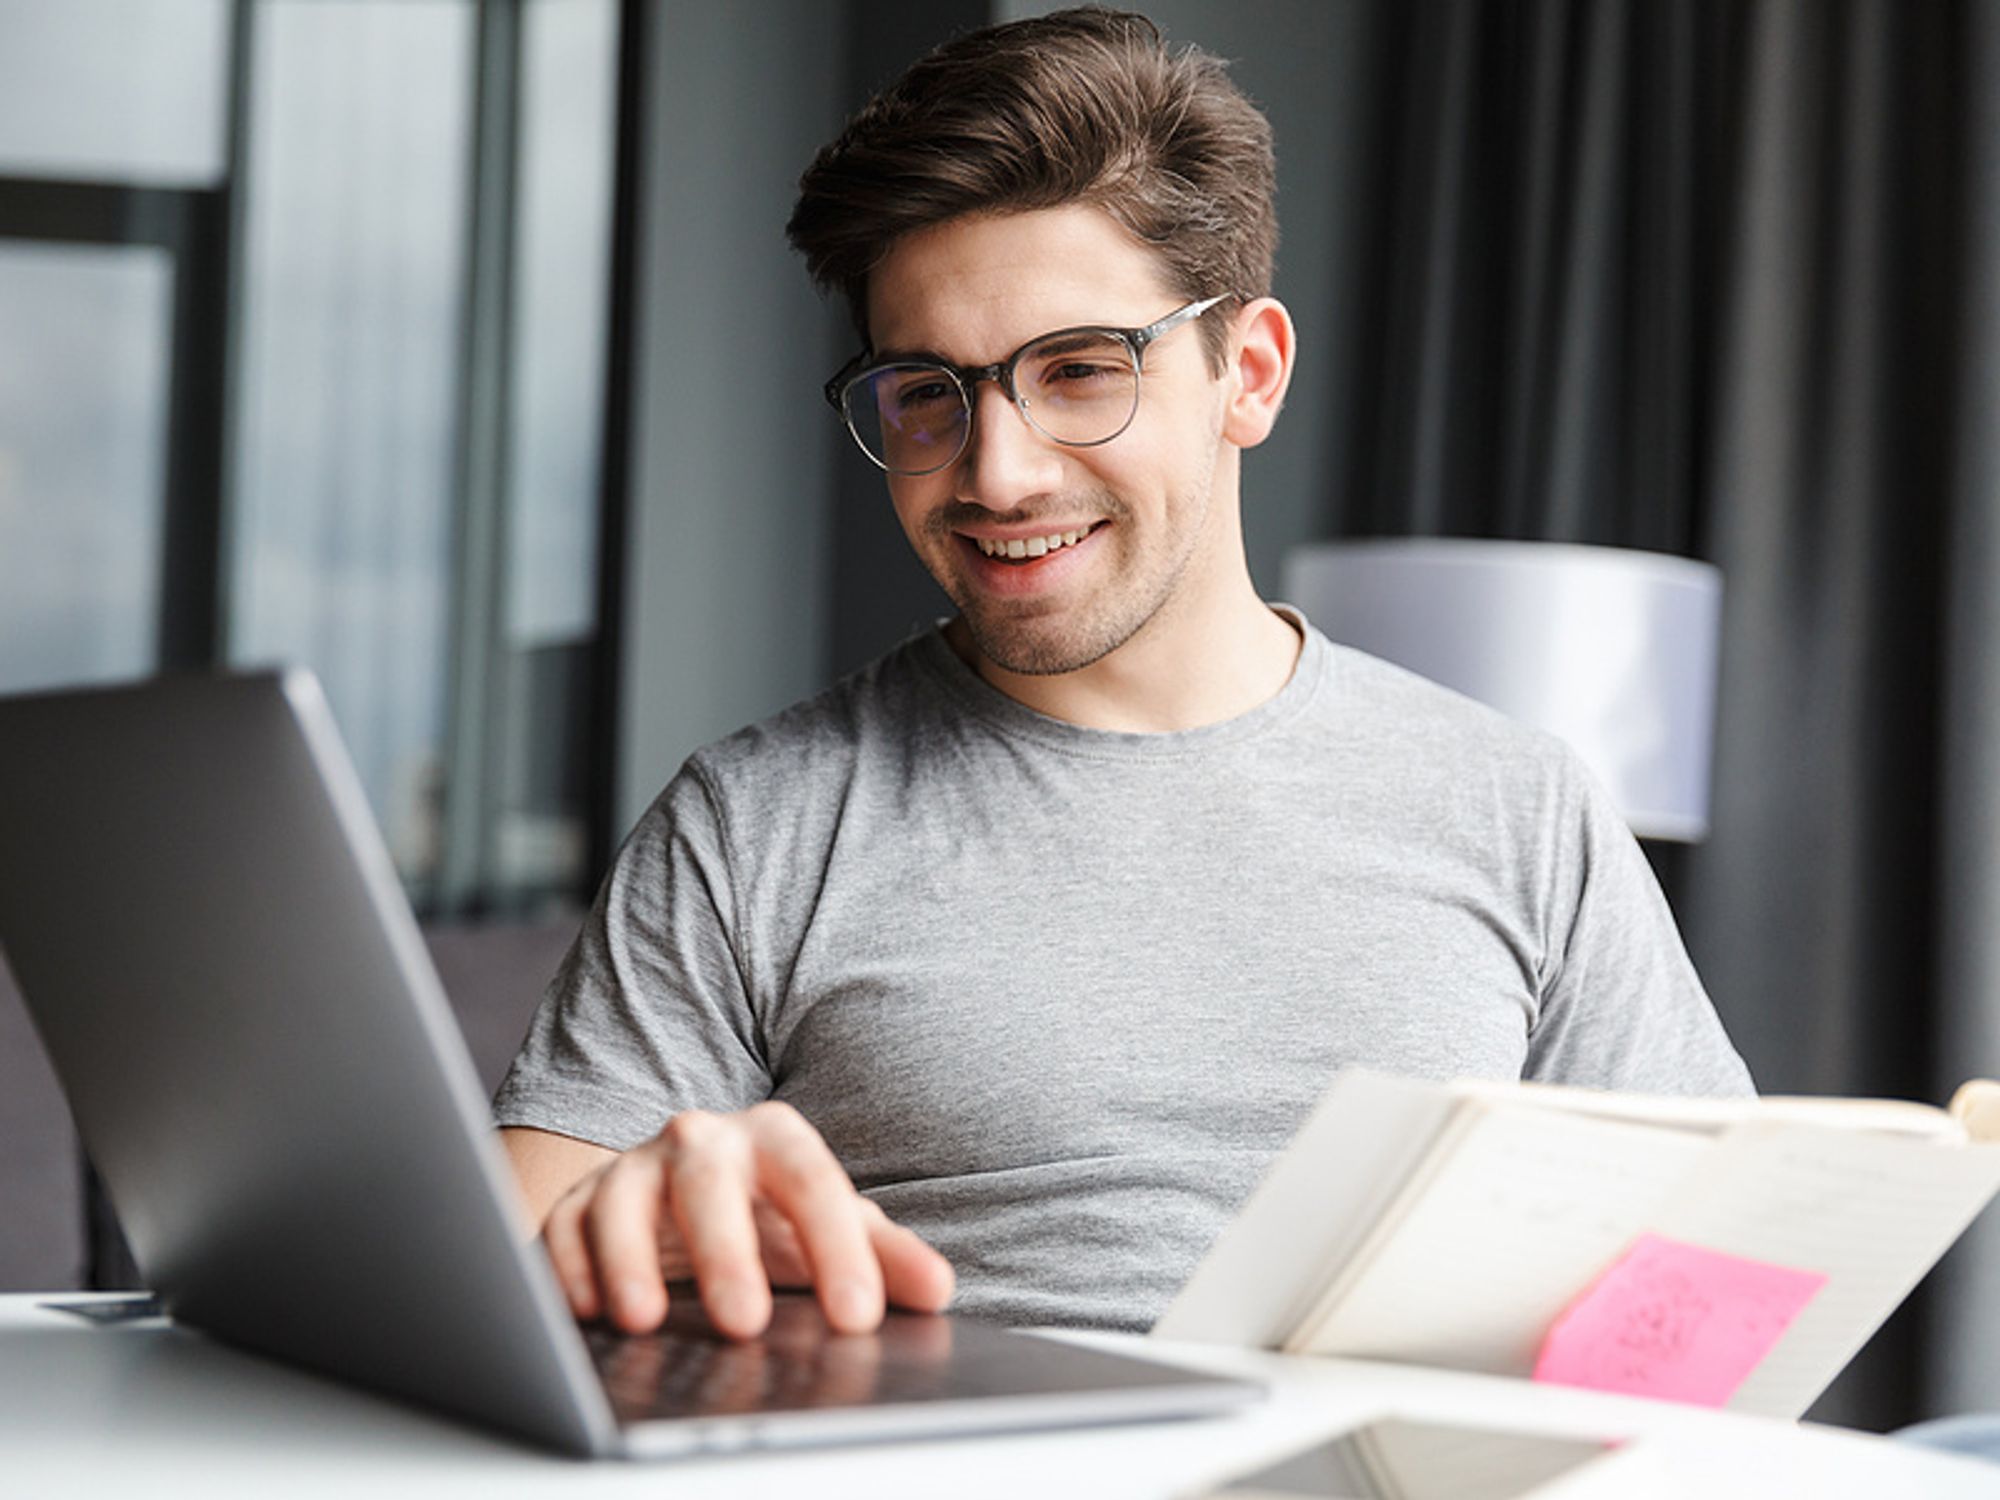 Man using a laptop quantifies information on his resume